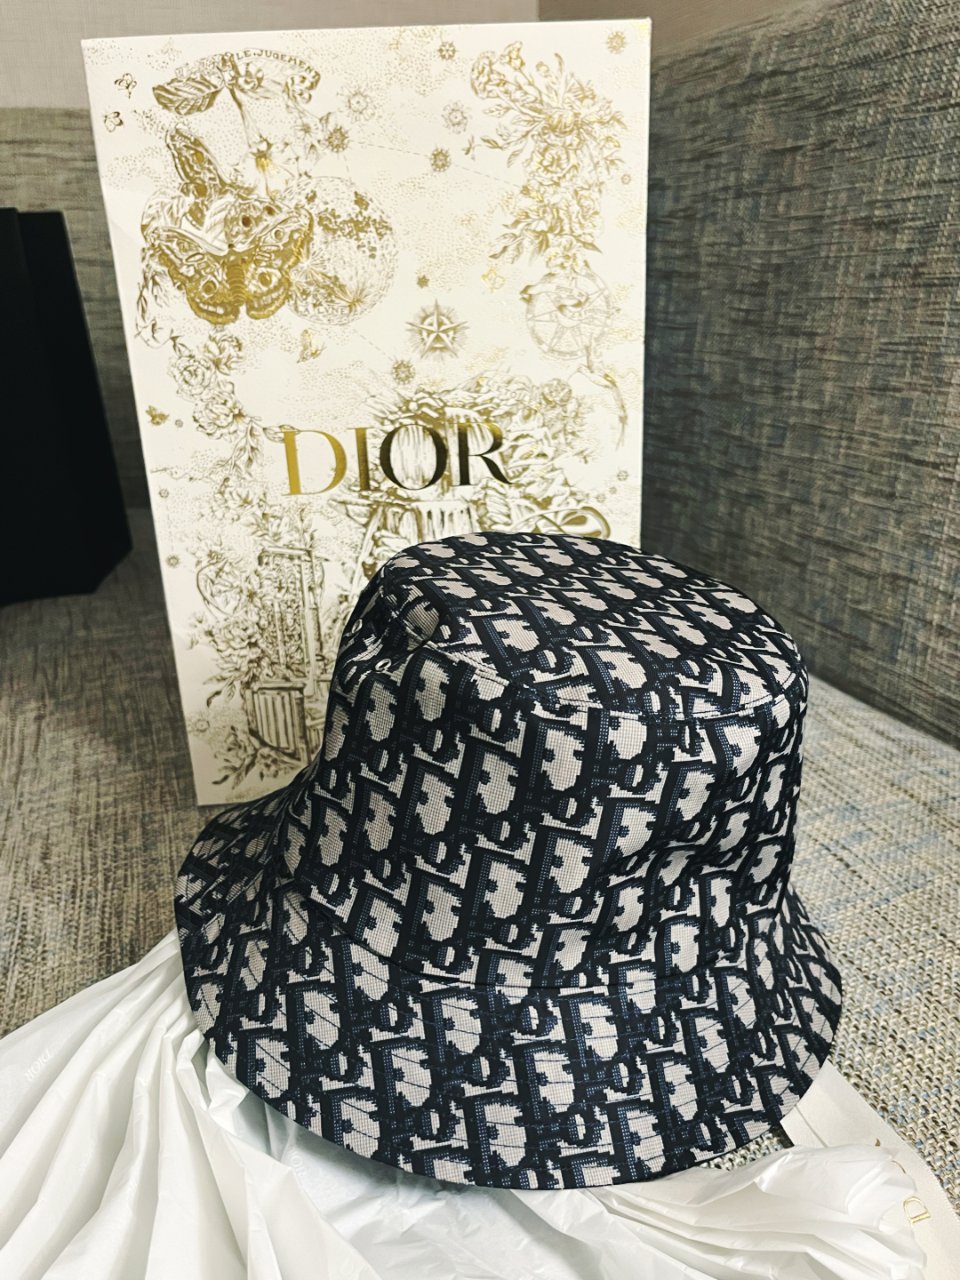 Dior双面渔夫帽🎩YYDS...